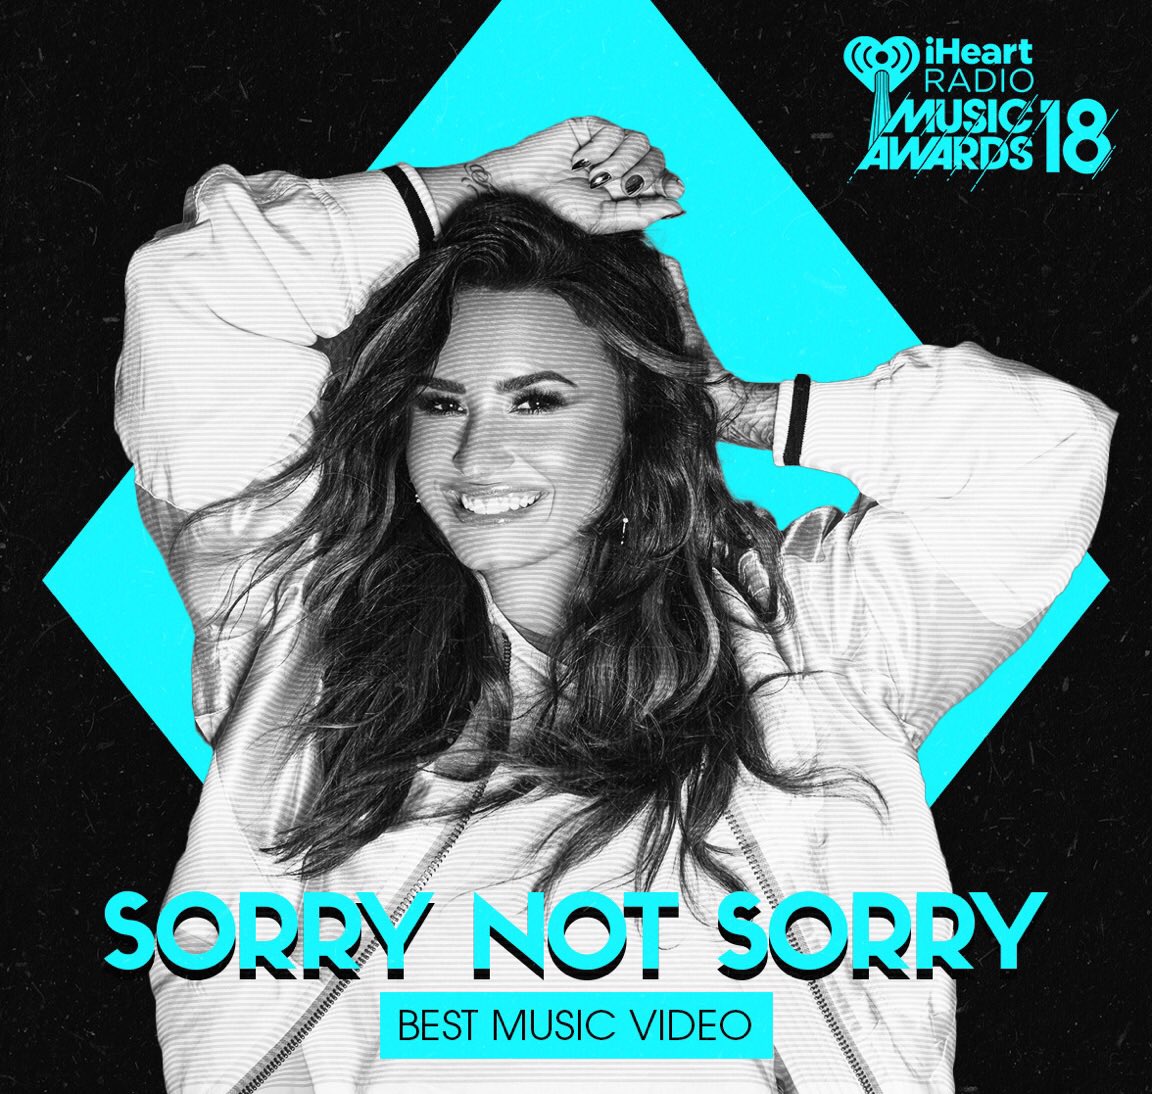 #BestMusicVideo #SorryNotSorry #iHeartAwards ???? https://t.co/DhyeYizpZc